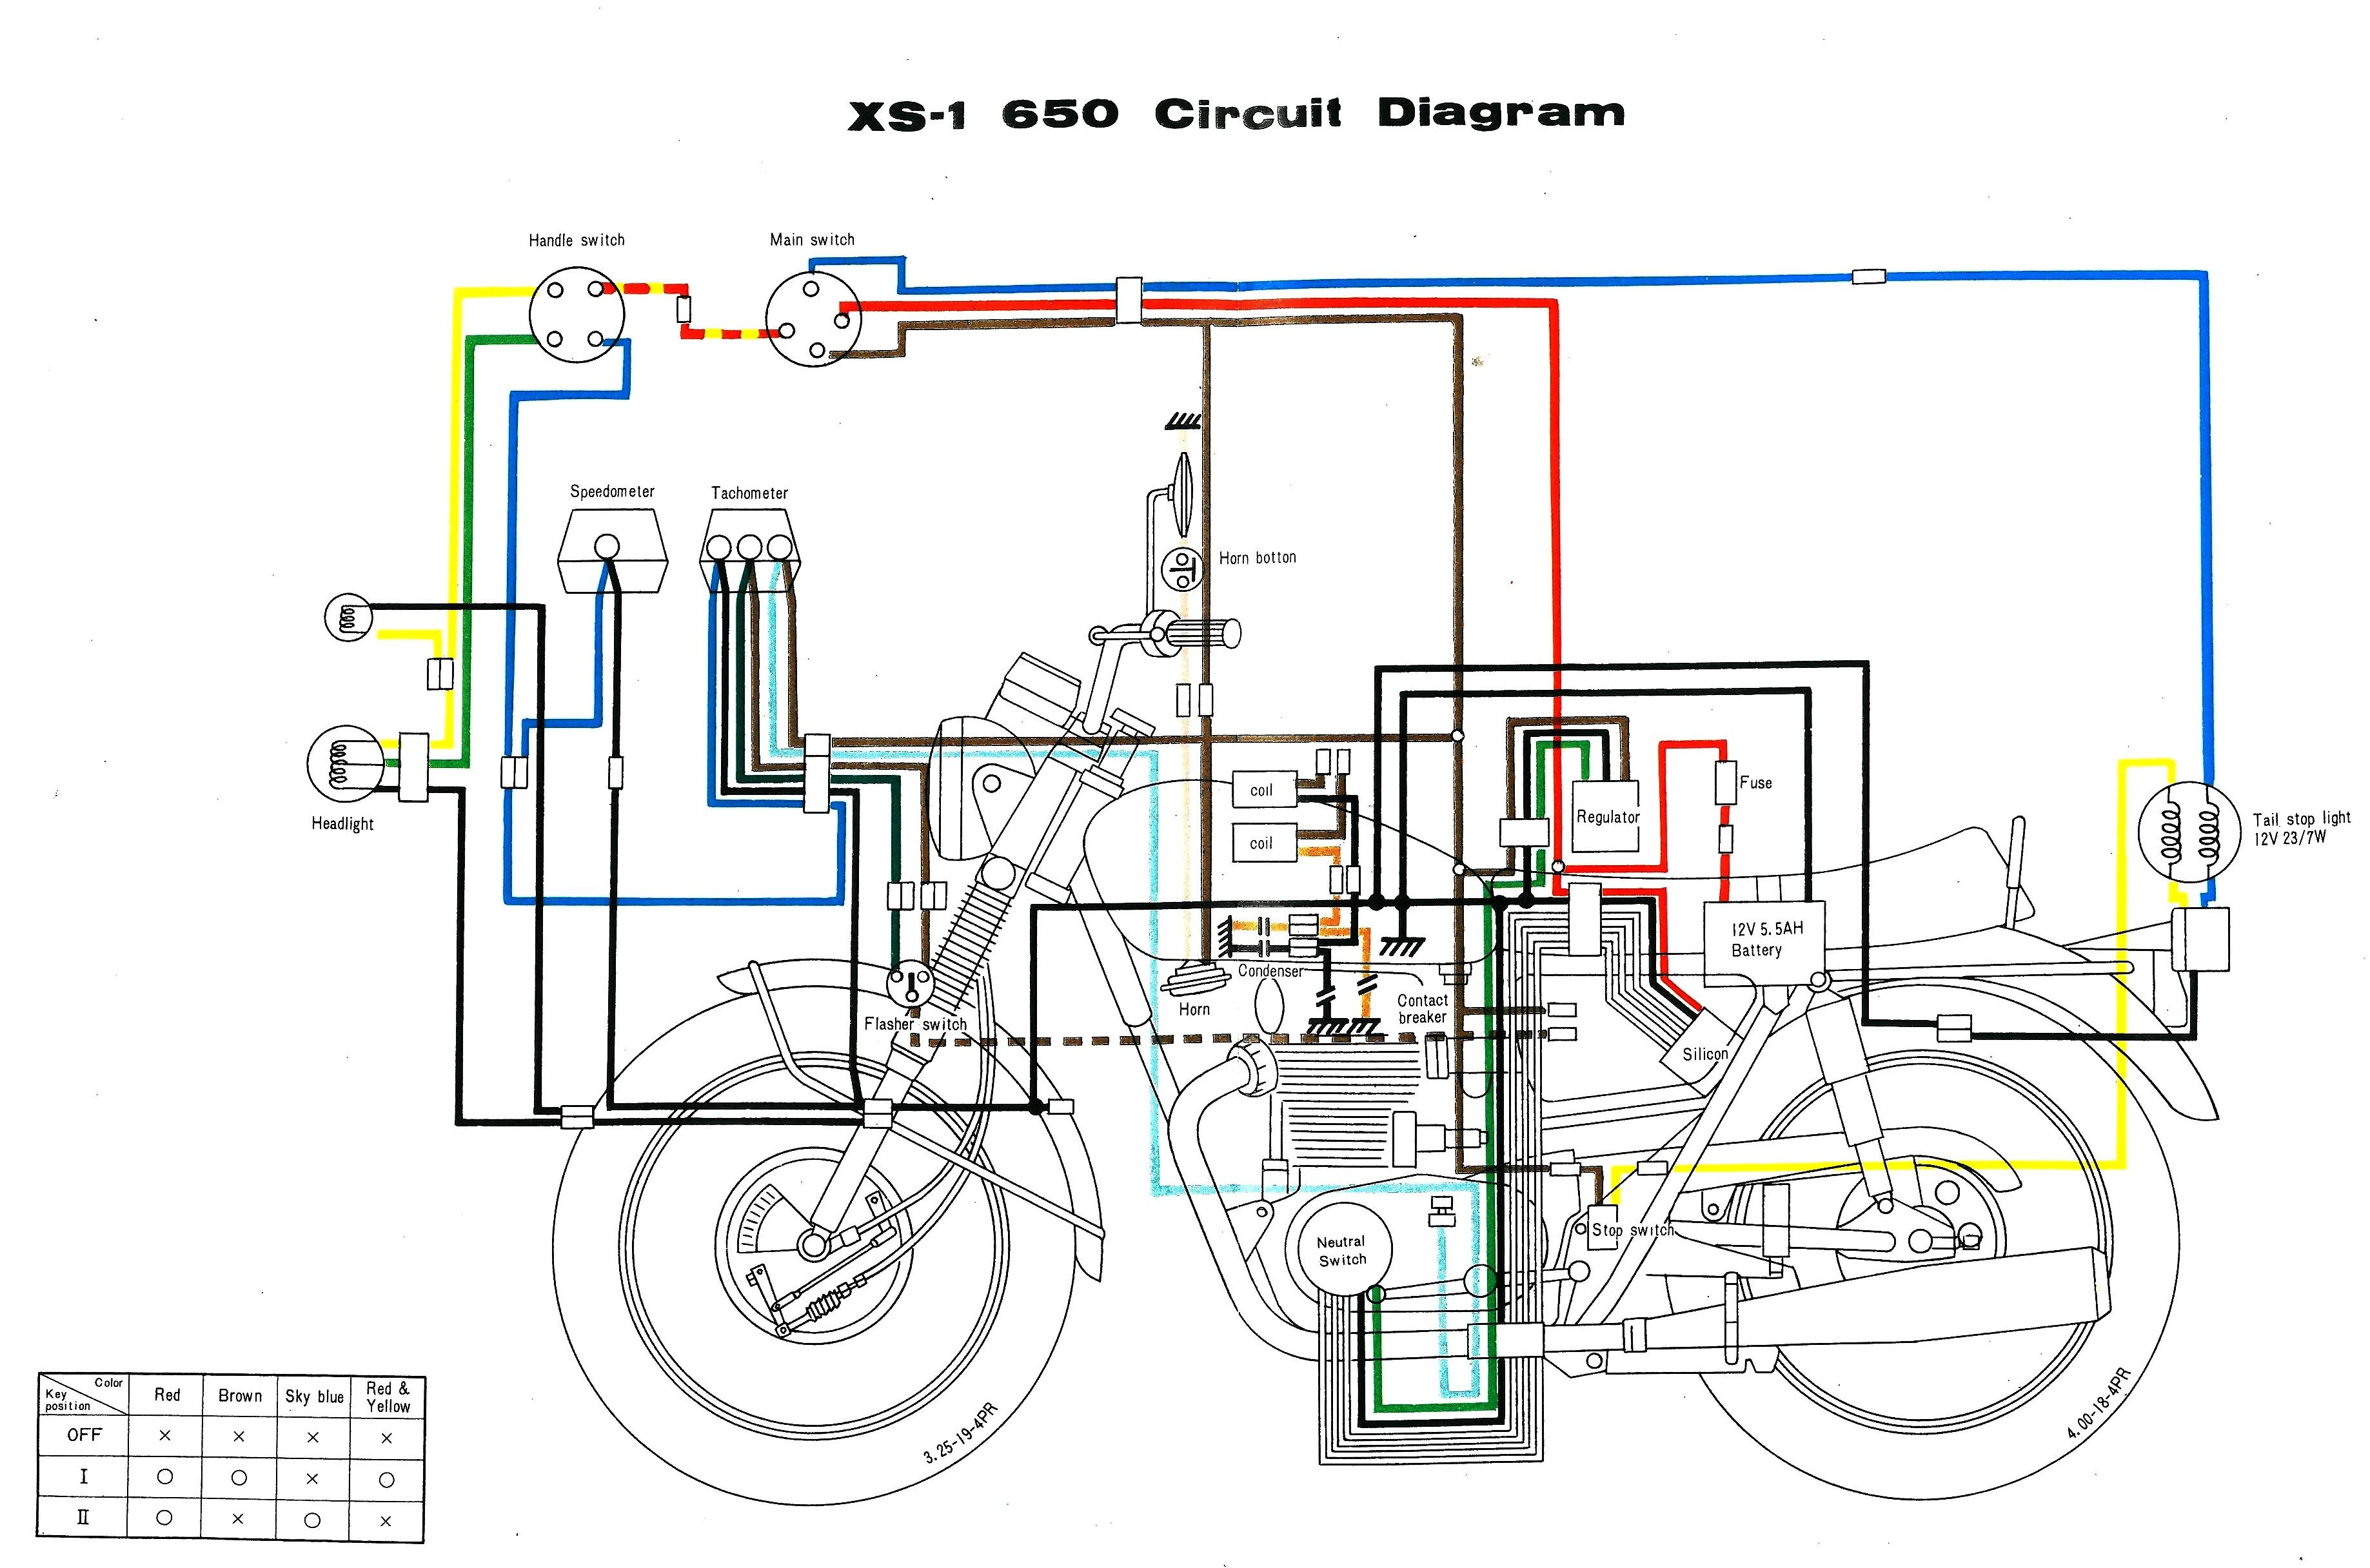 Electrical Wiring Diagram Software | Manual E-Books - Wiring Diagram Software